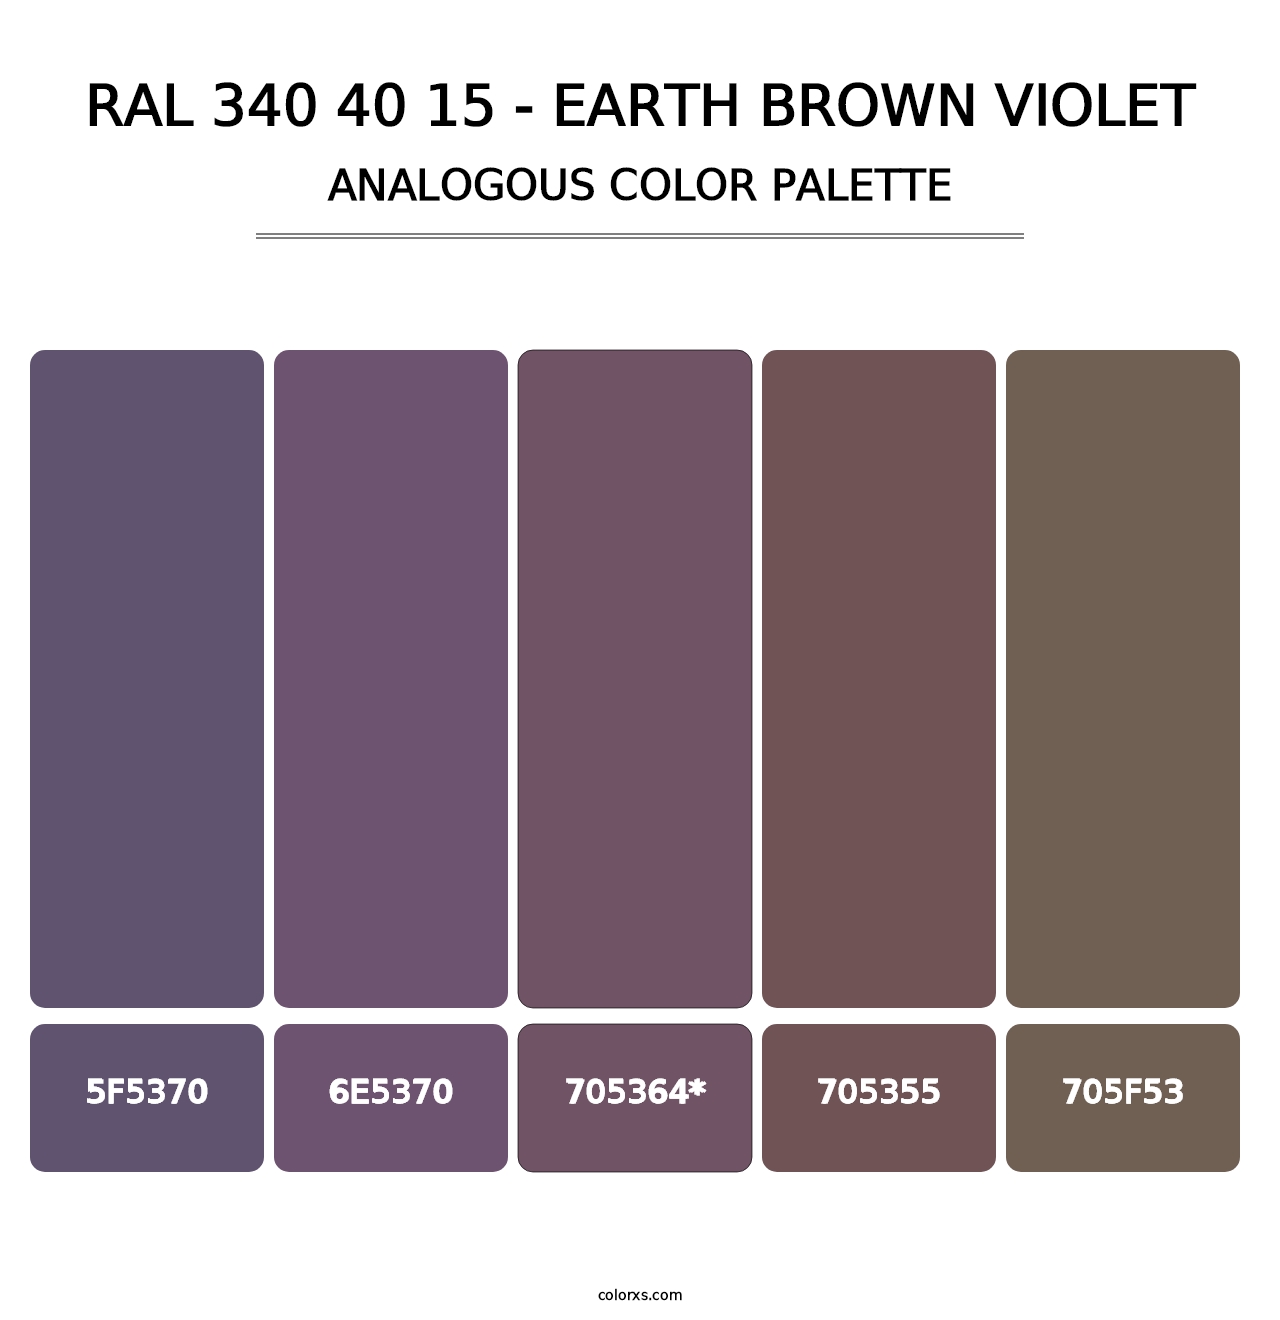 RAL 340 40 15 - Earth Brown Violet - Analogous Color Palette